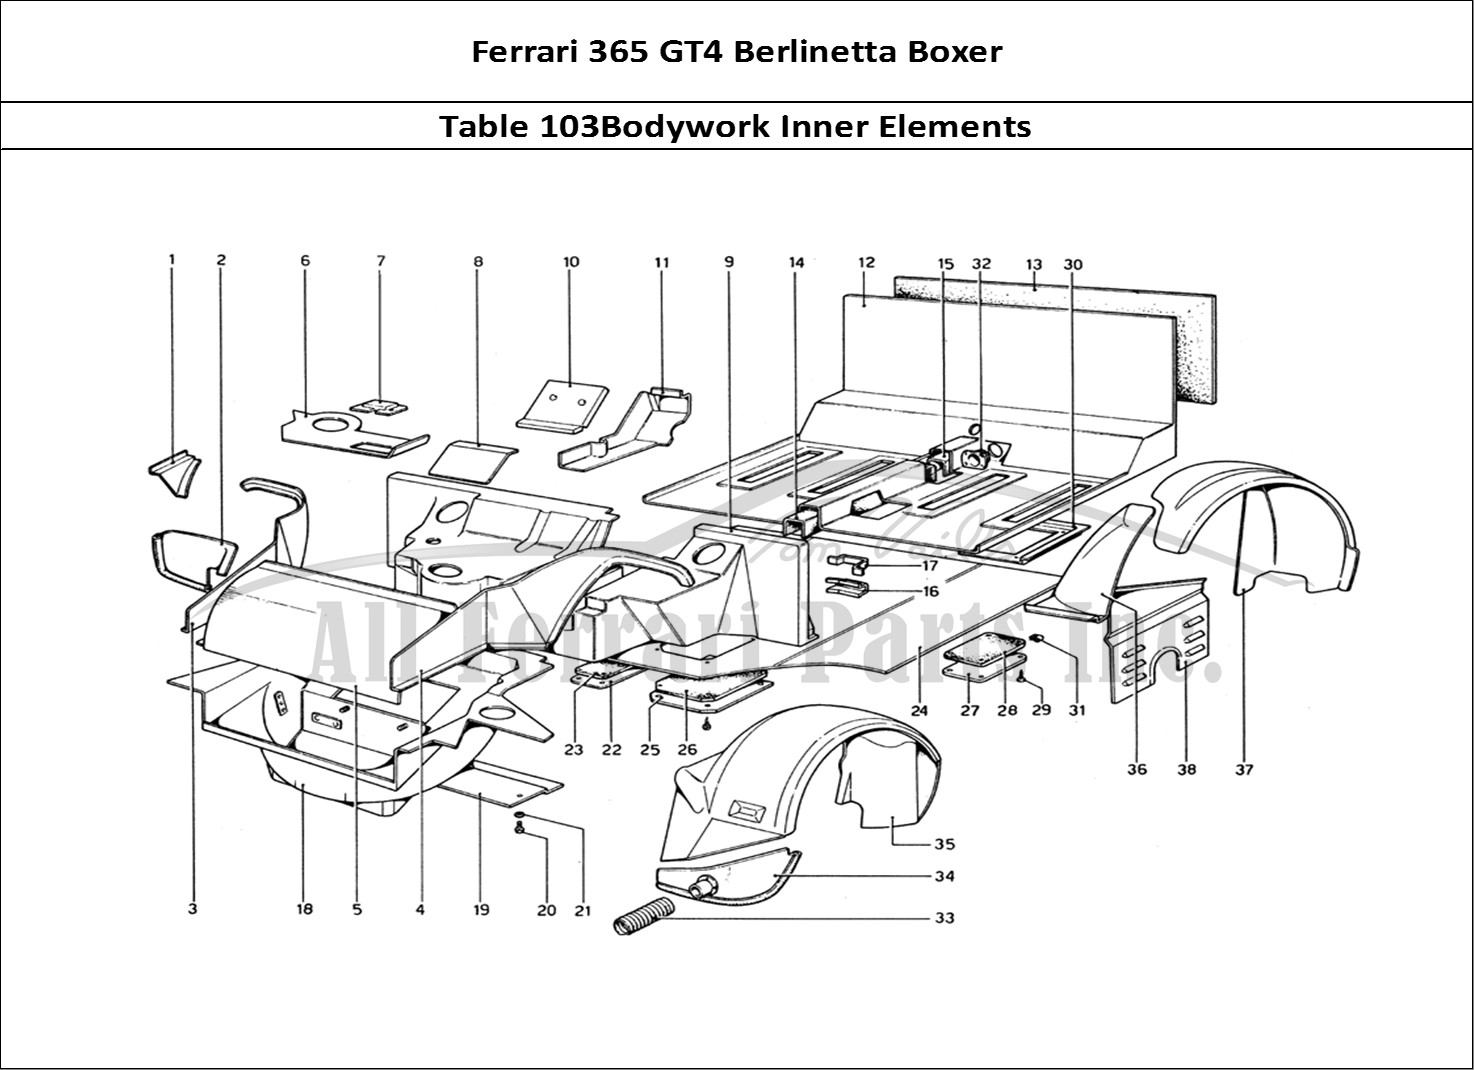 Ferrari Parts Ferrari 365 GT4 Berlinetta Boxer Page 103 Body Shell - Inner Elemen